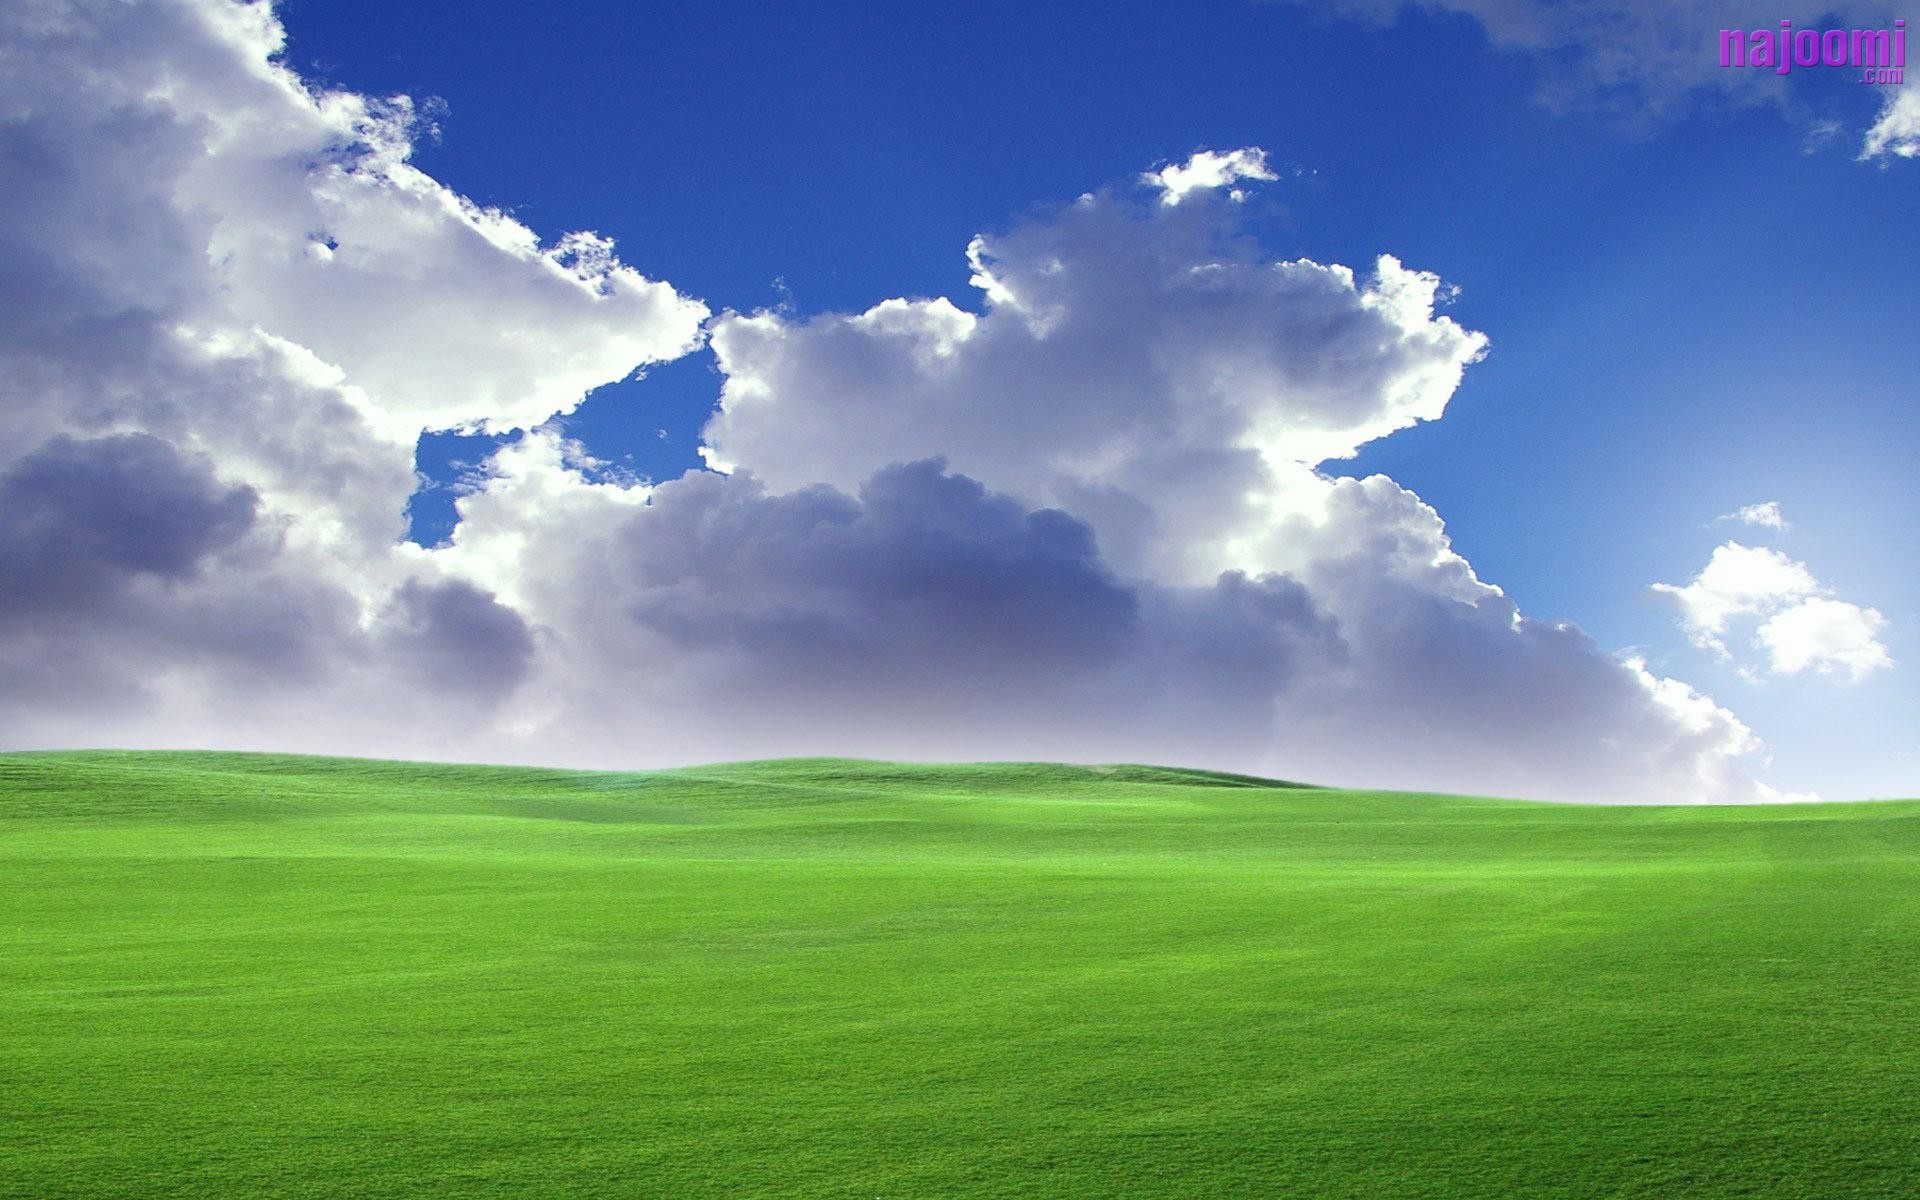 Windows XP wallpaper ·① Download free amazing backgrounds for desktop